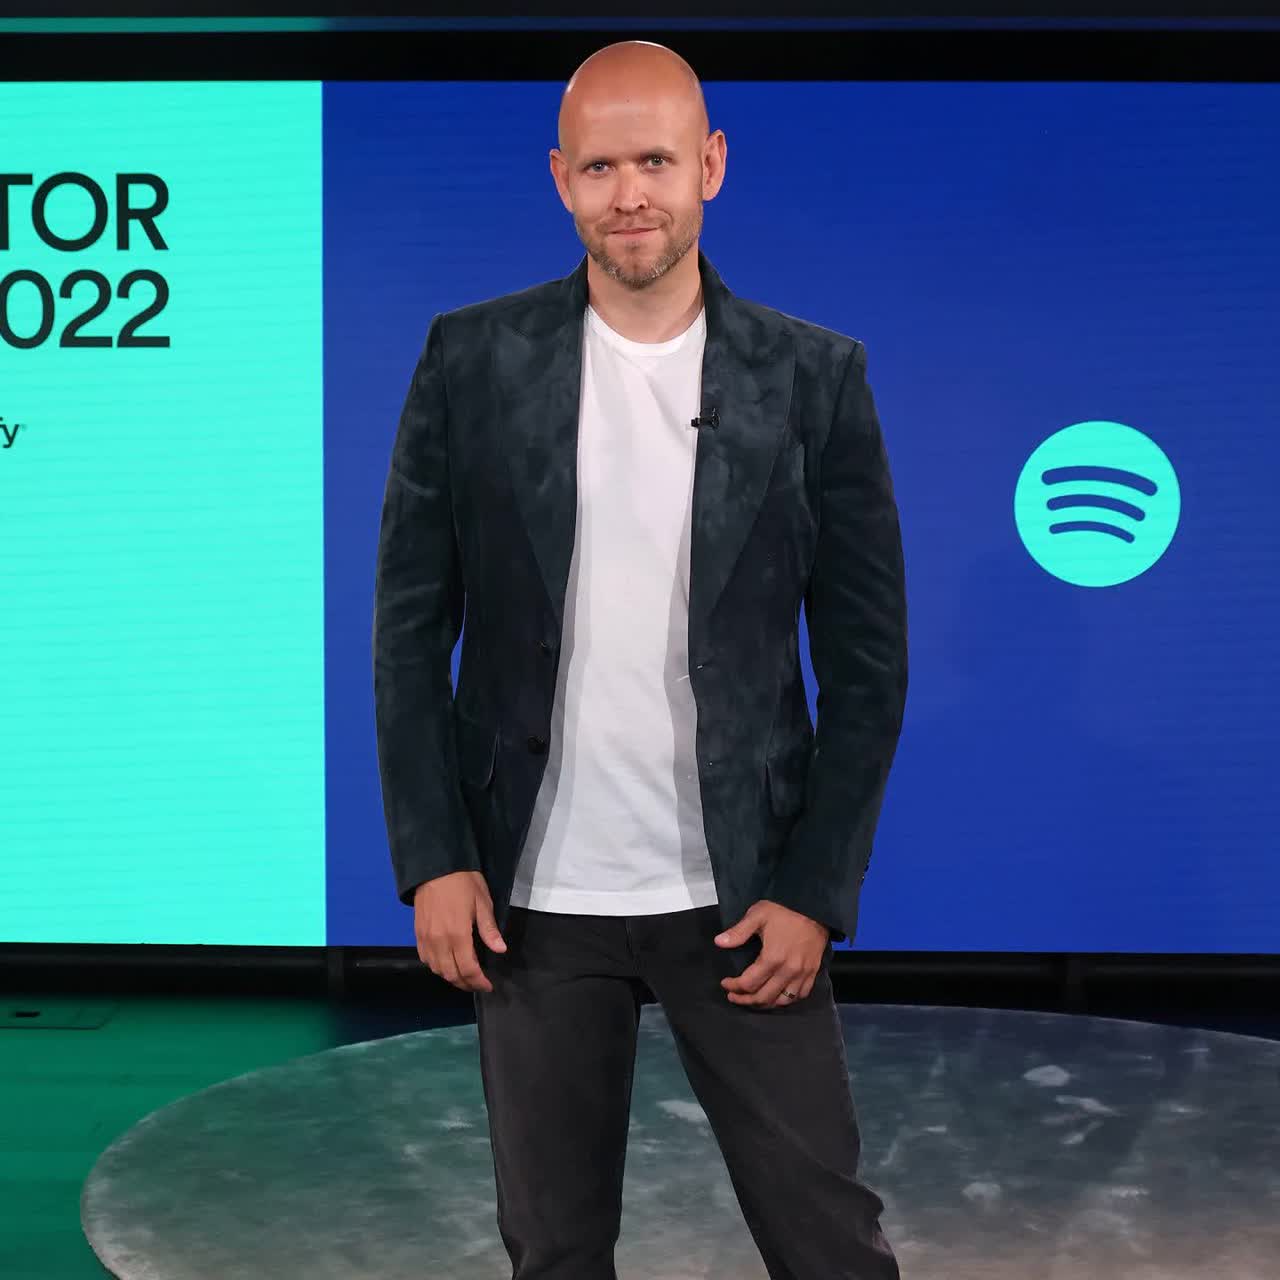 Spotify Founder and CEO Daniel Ek's Investor Day 2022 Remarks - Spotify